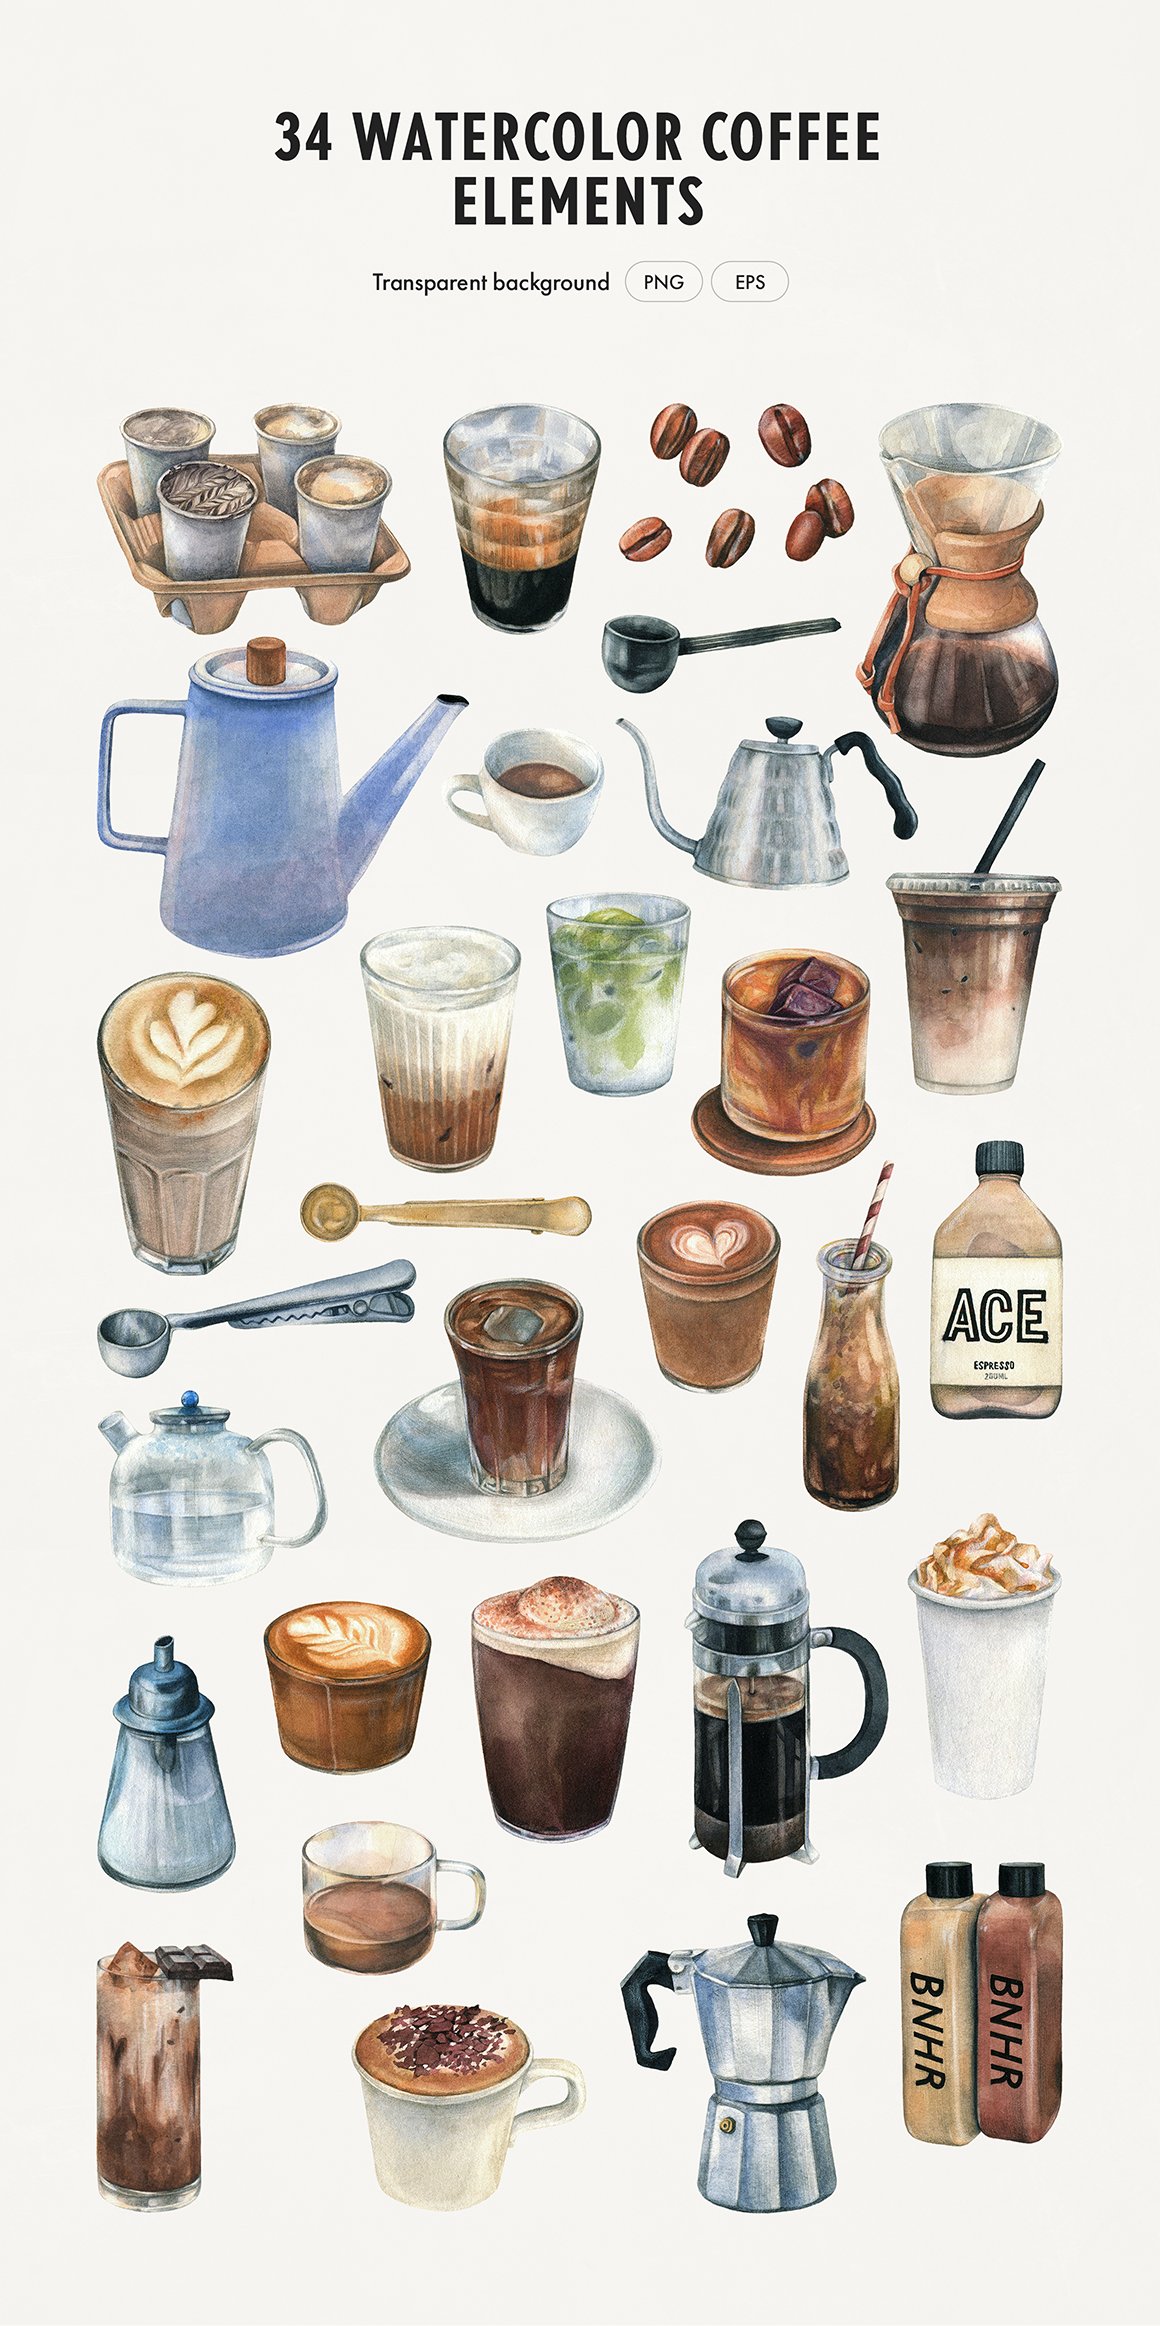 Watercolor Coffee Bundle 2405258